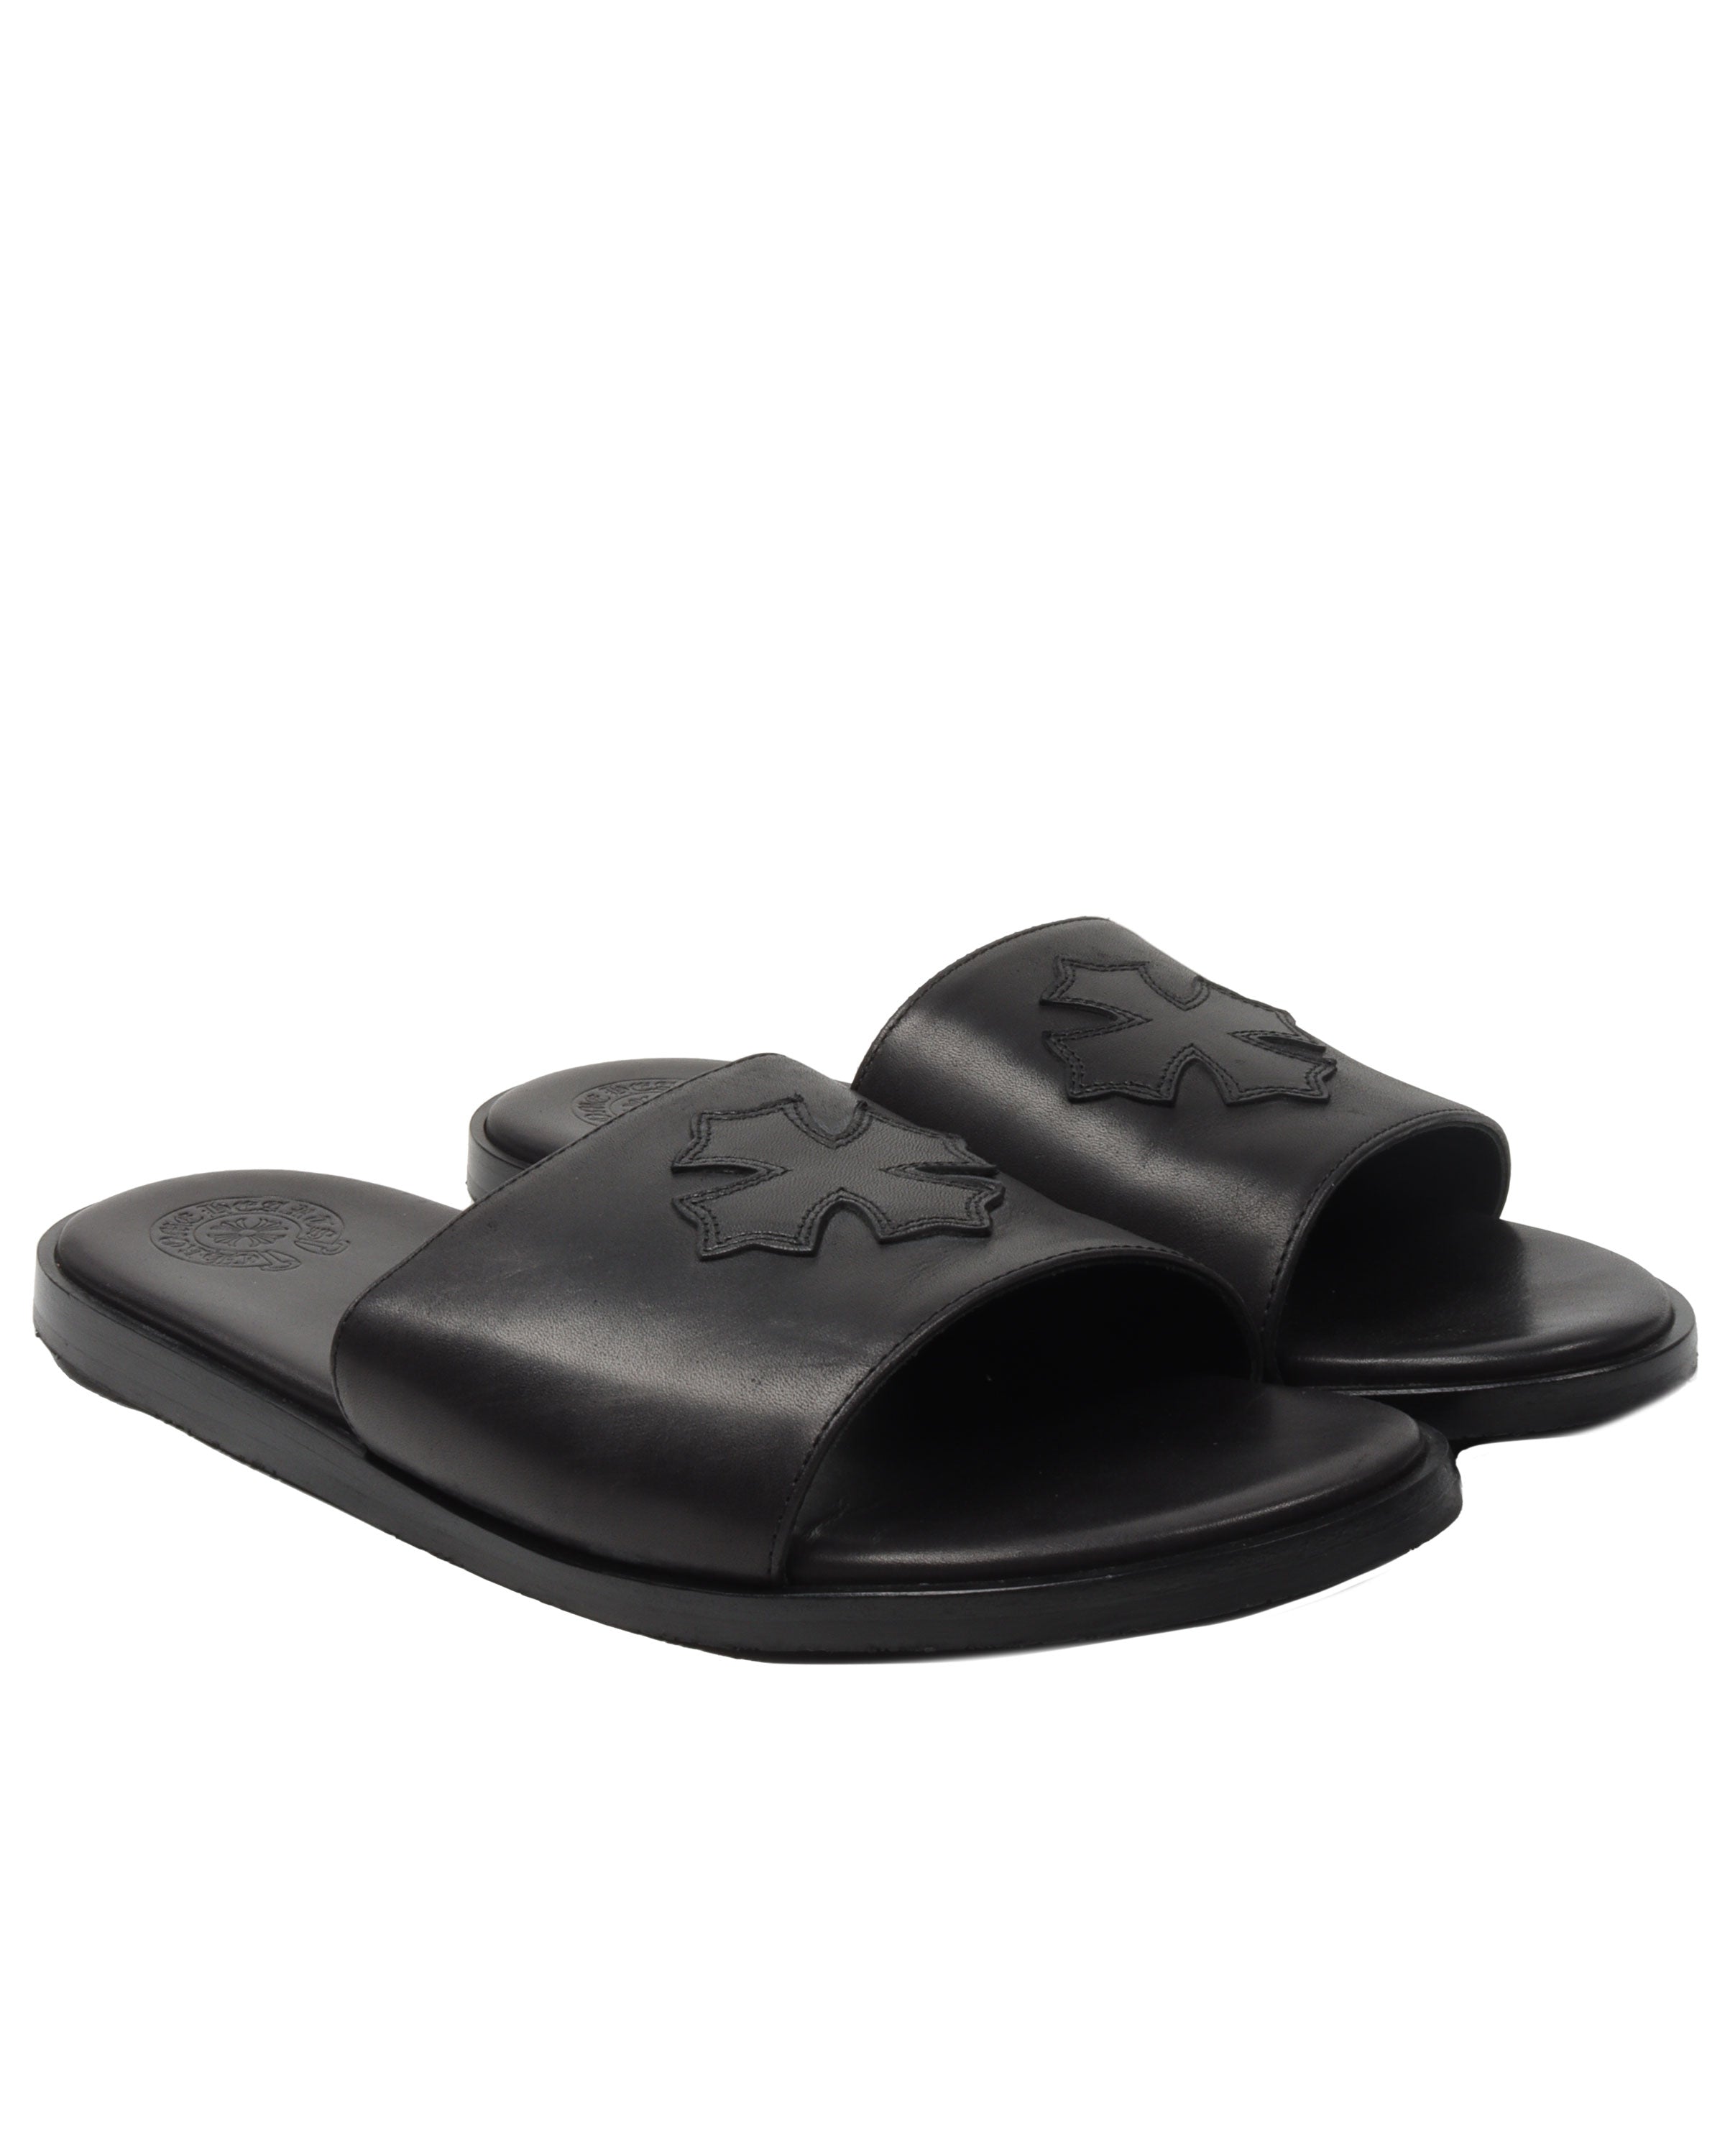 Black Cross Sandals